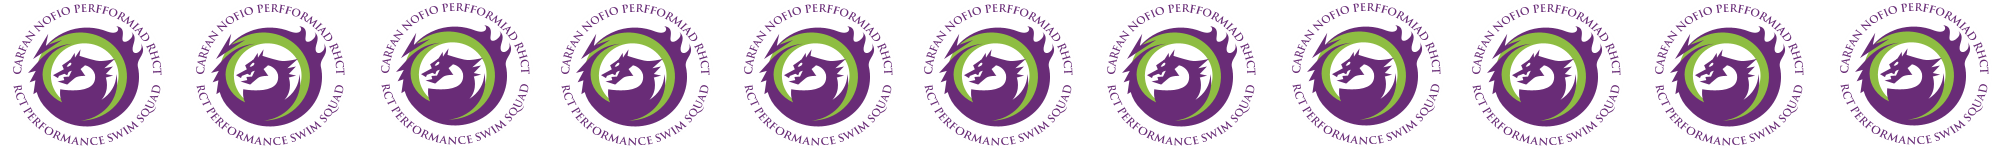 RCT Performance Swim Squad South Wales